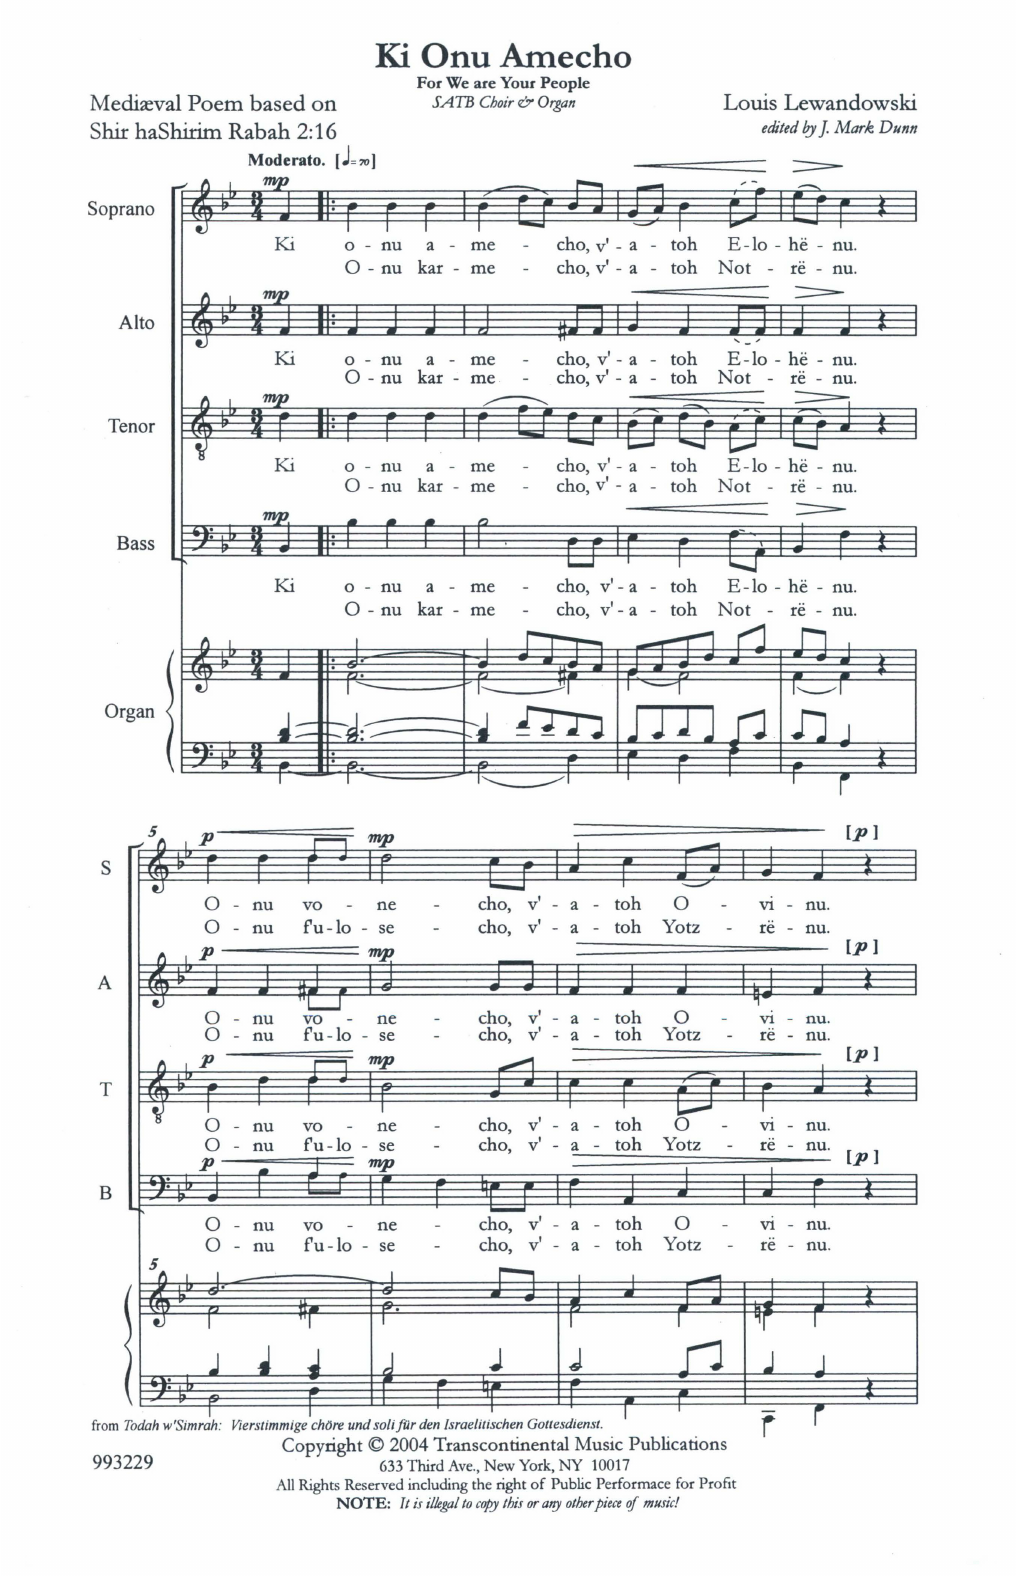 Louis Lewandowski Two Settings of Ki Onu Omecho Sheet Music Notes & Chords for SATB Choir - Download or Print PDF